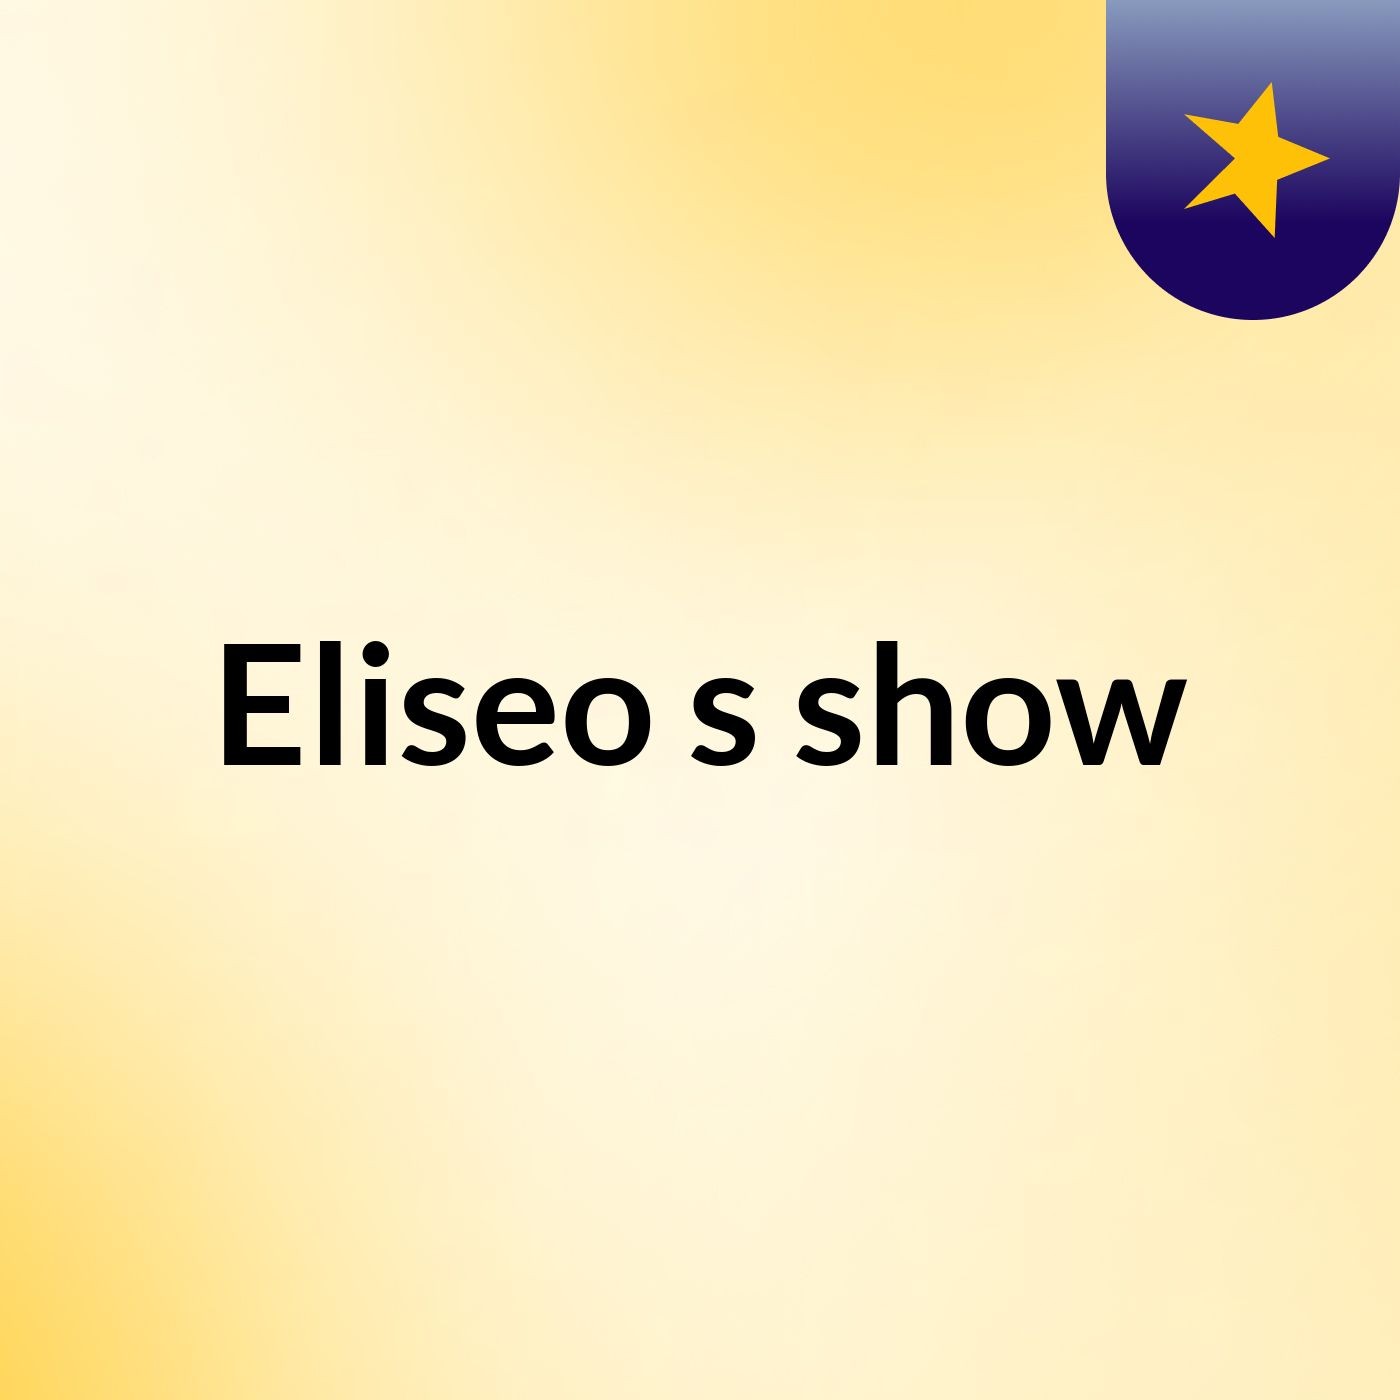 Eliseo's show